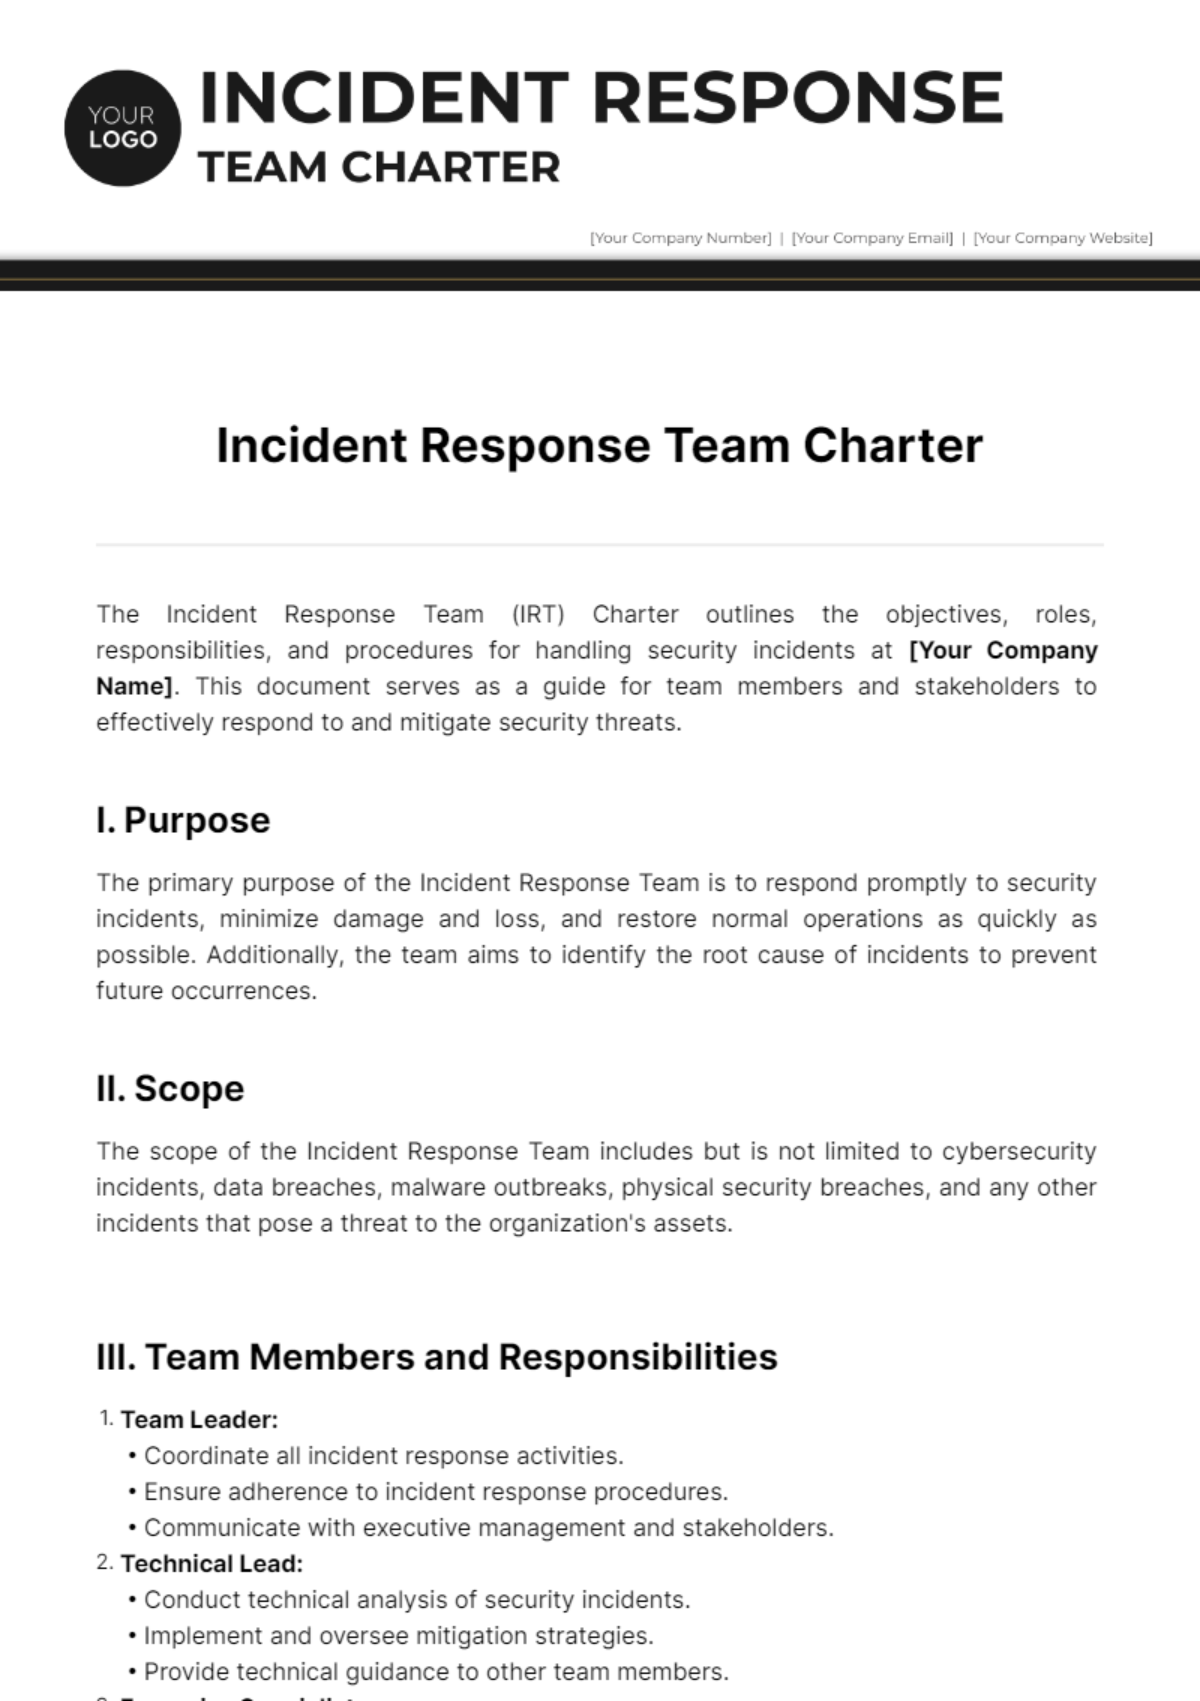 Incident Response Team Charter Template